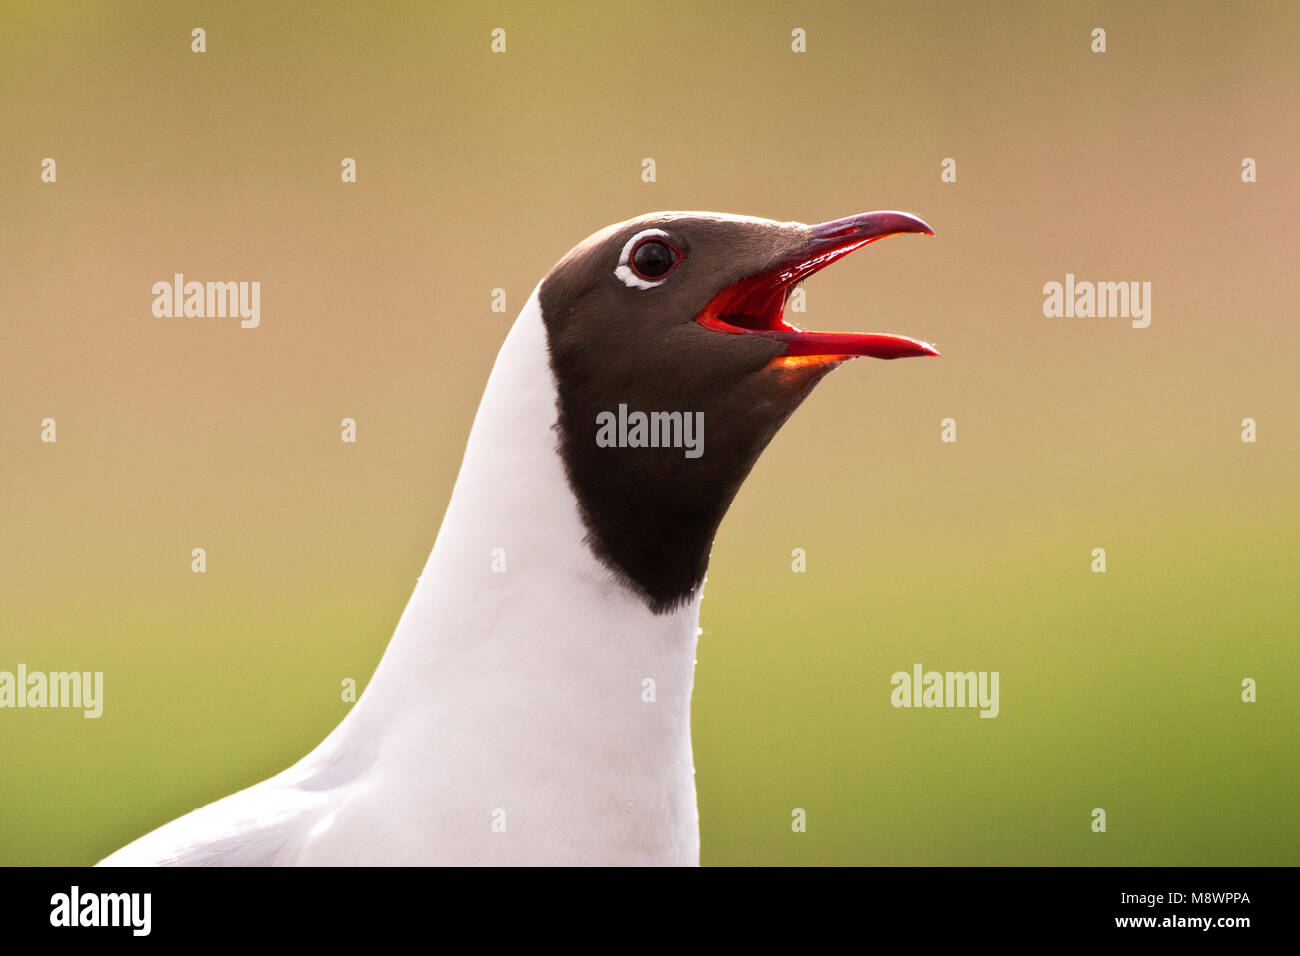 Kokmeeuw roepend; Black-headed Gull calling Stock Photo